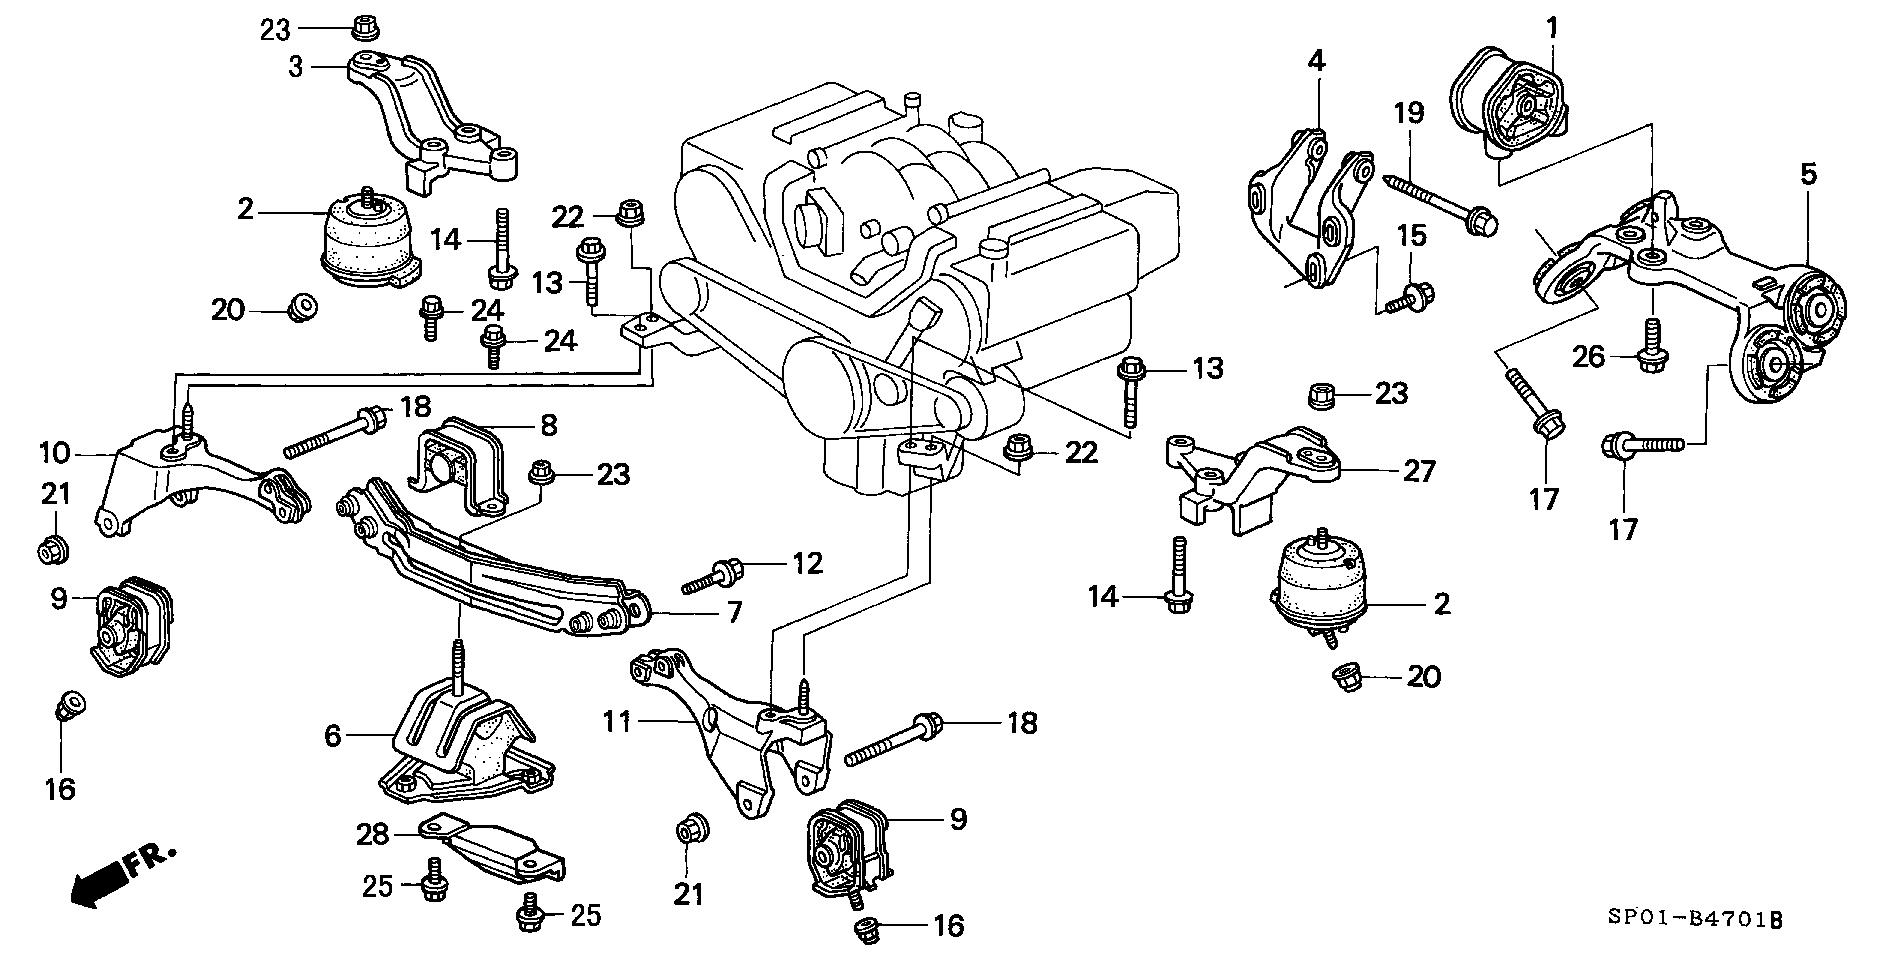 ENGINE MOUNT(120-)